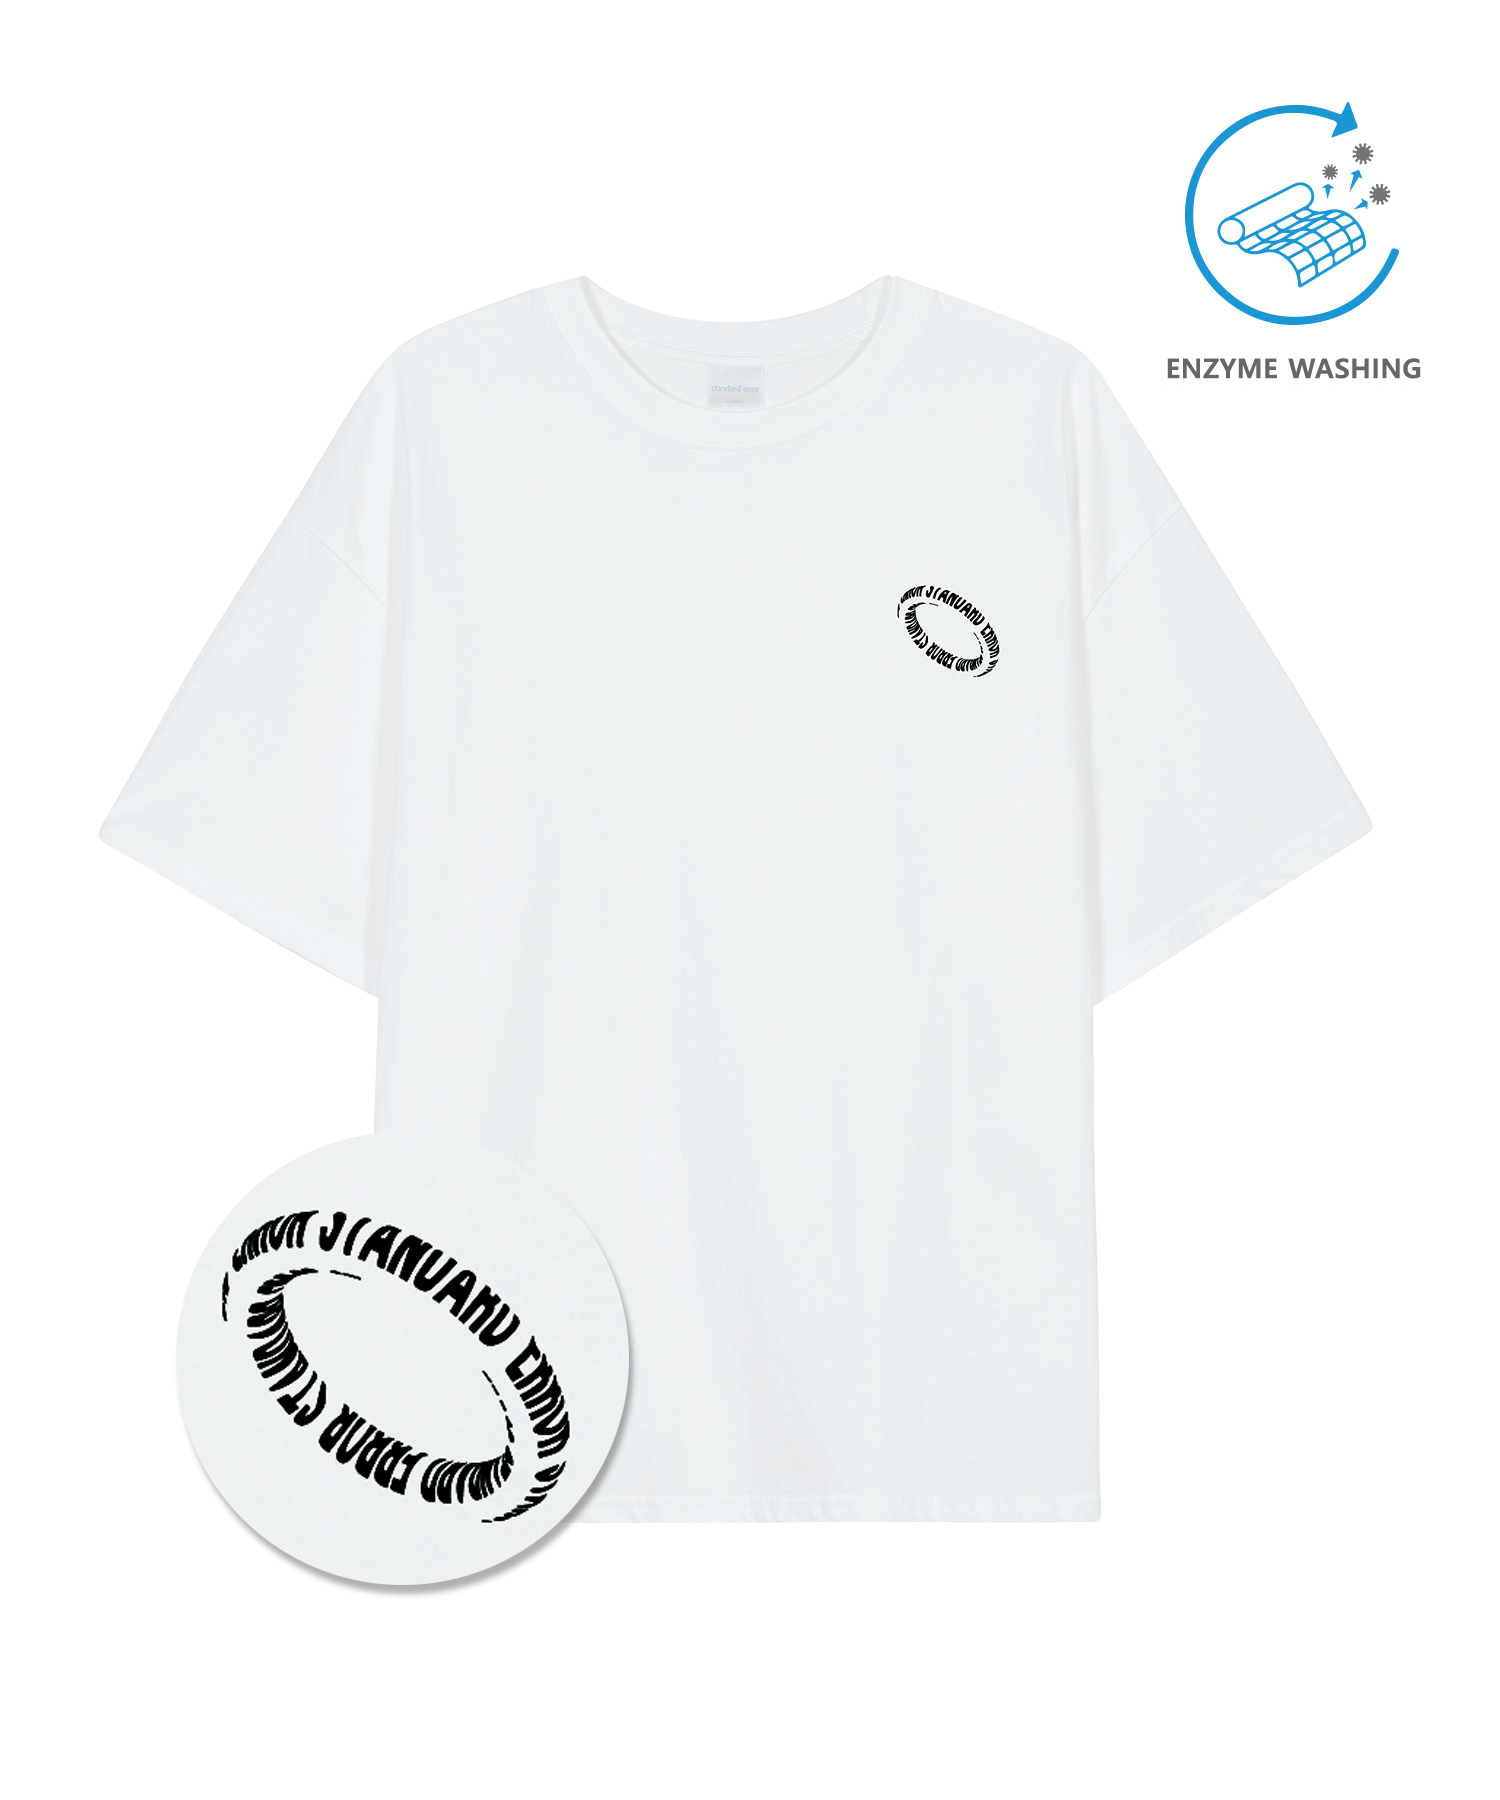 IRT169 [Compact YAN] Enzaim Washing 3D Mini Circle Short-sleeved T-shirt White